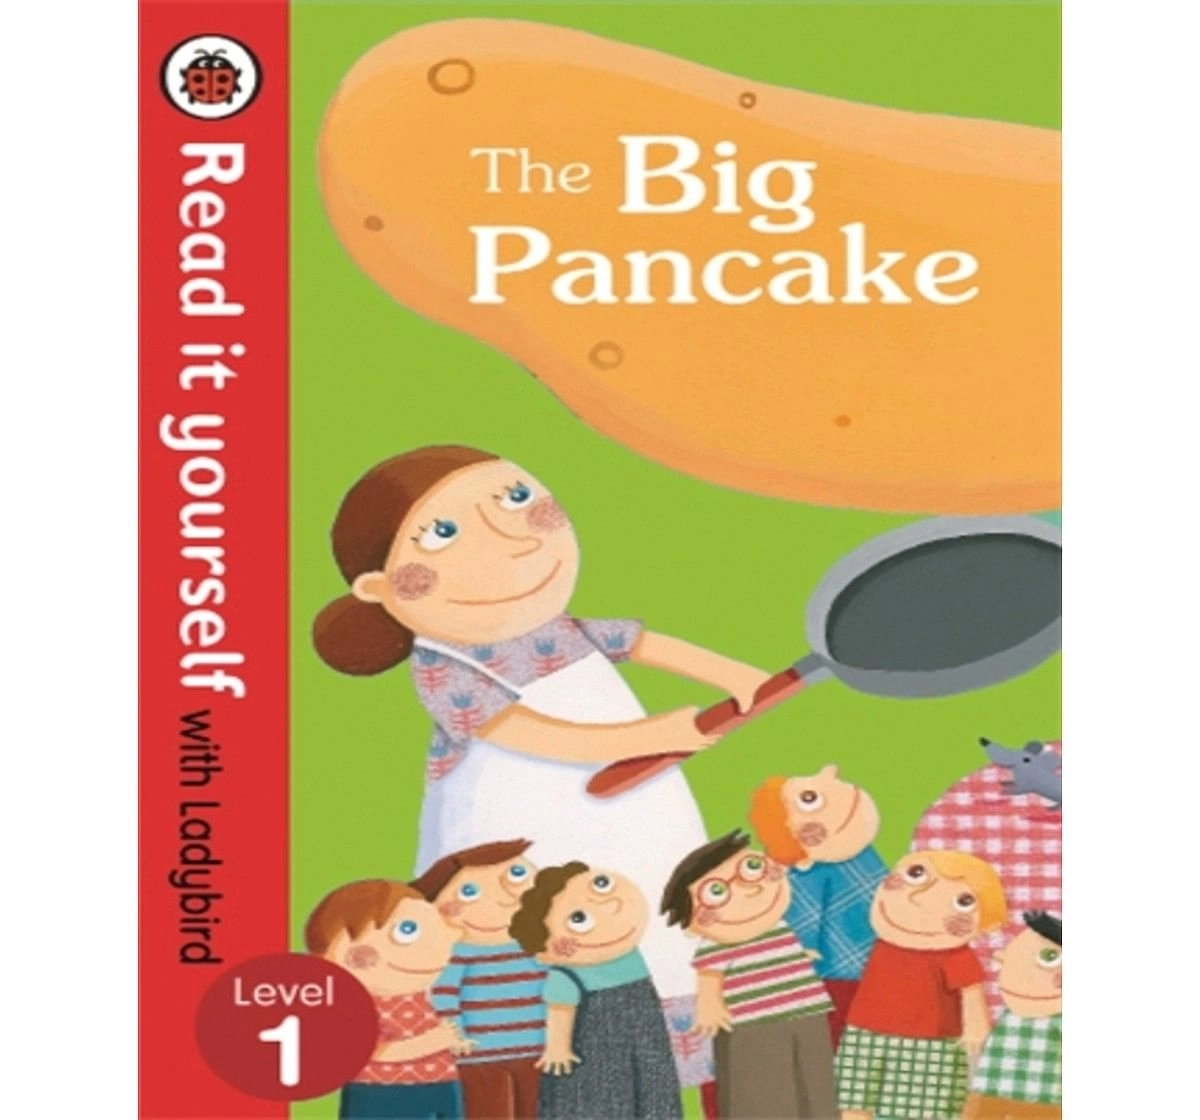 The Big Pancake: RIY (HB) Level 1, 32 Pages Book by Ladybird, Hardback